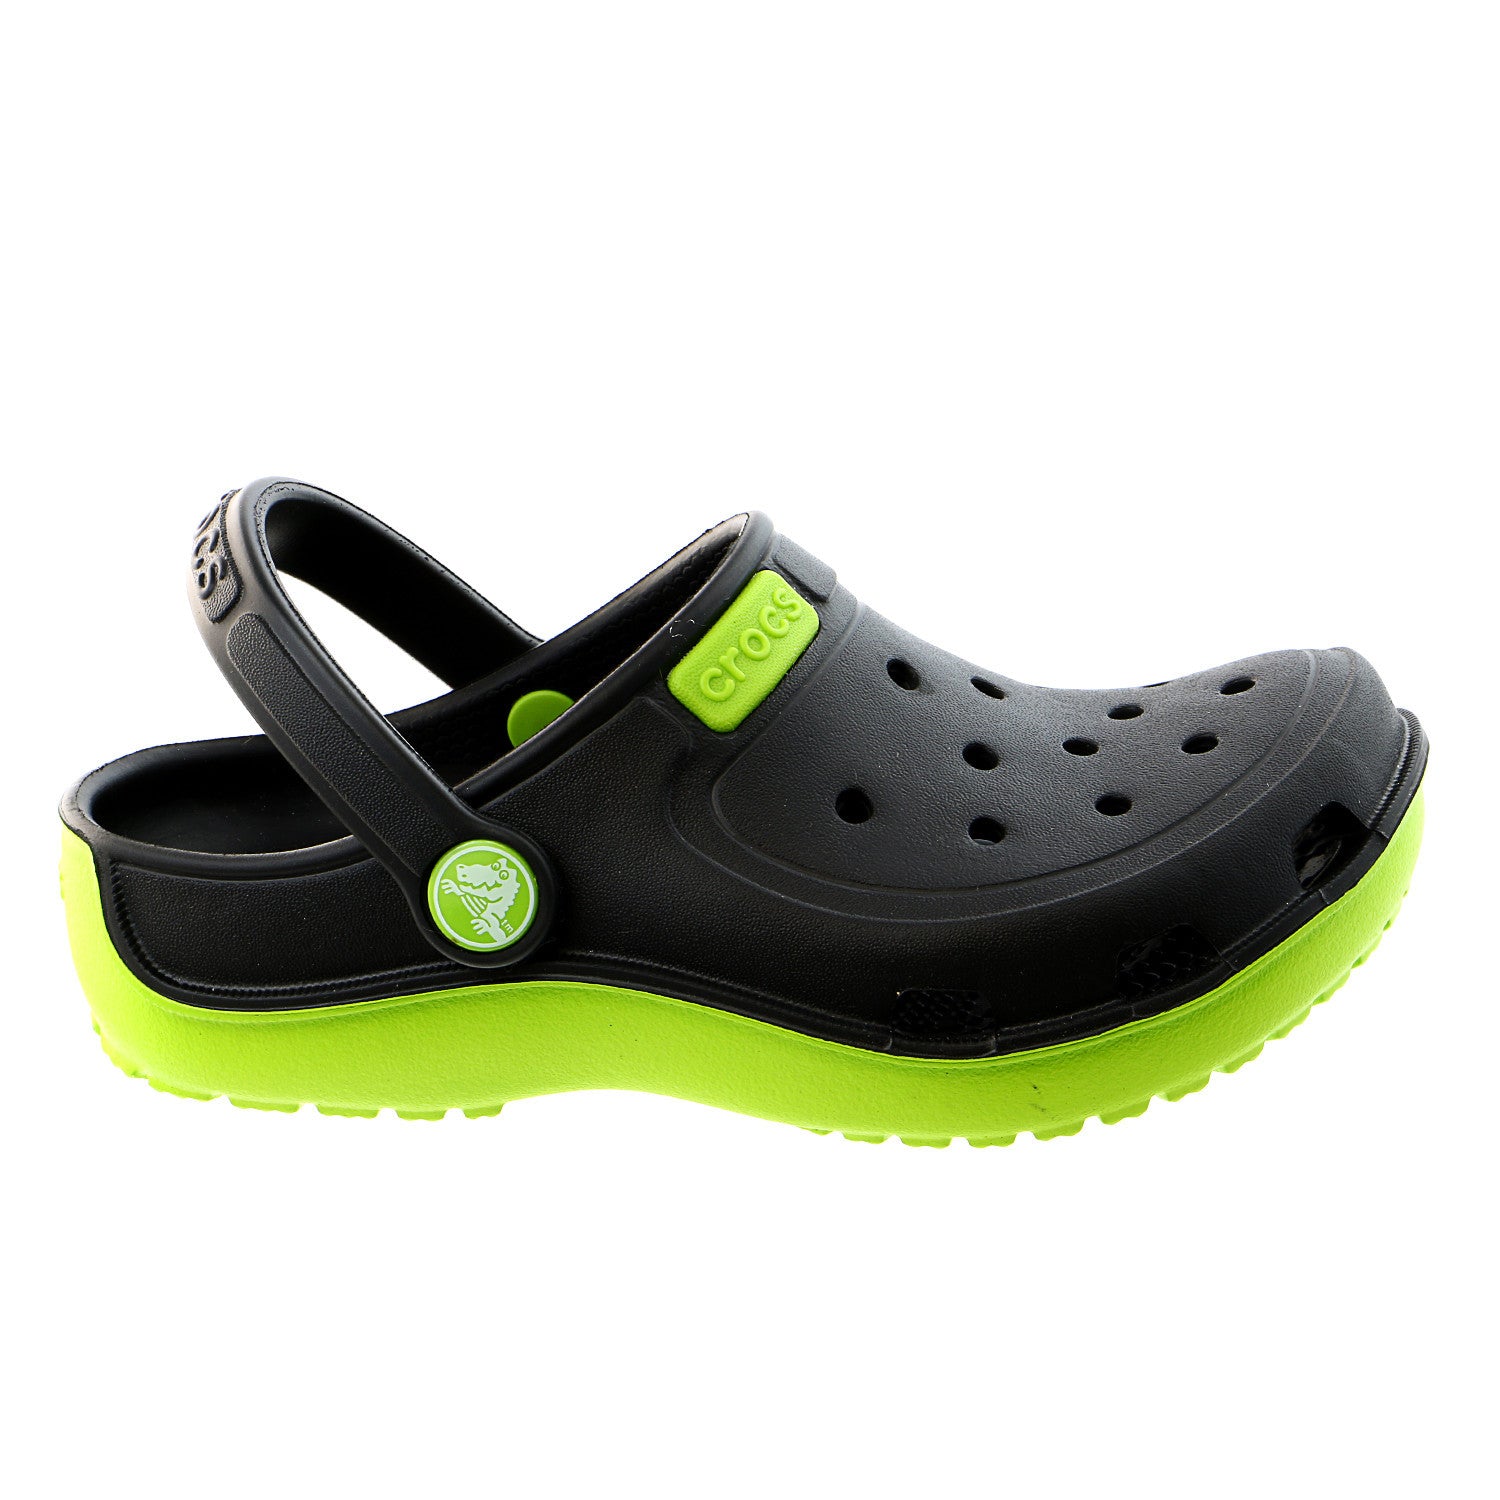 green and black crocs